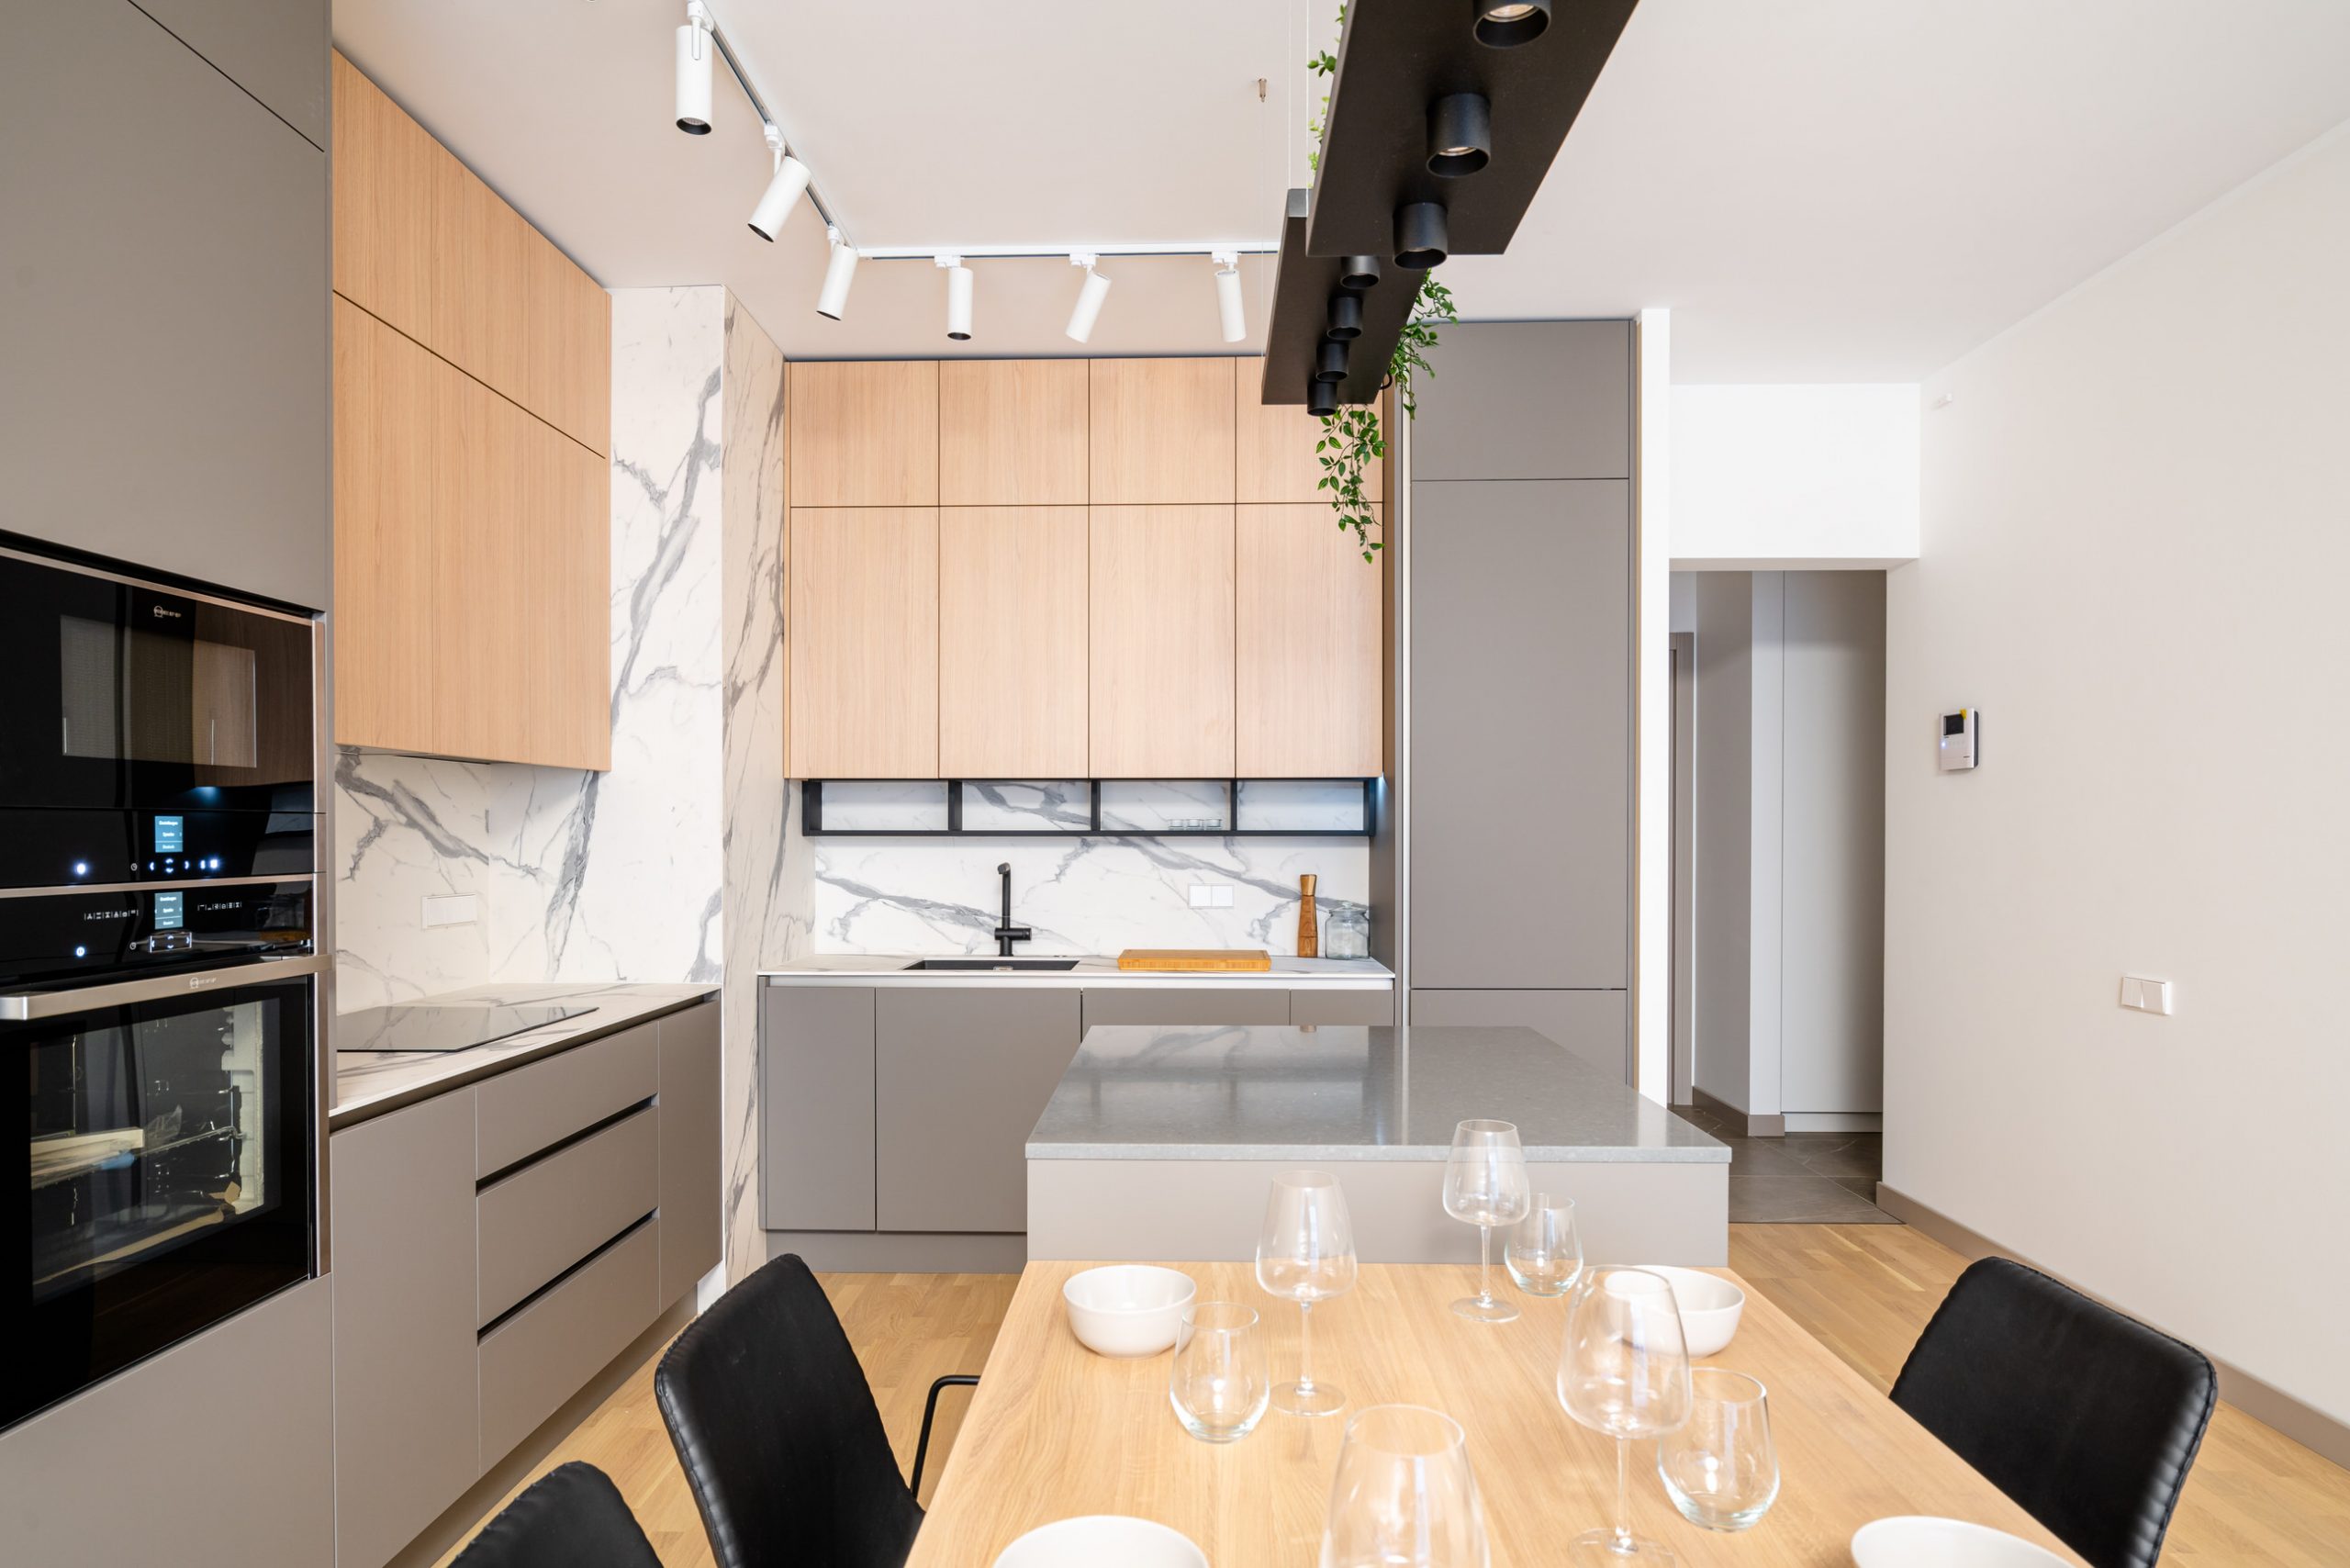 Corner kitchen in Scandinavian style in light colours